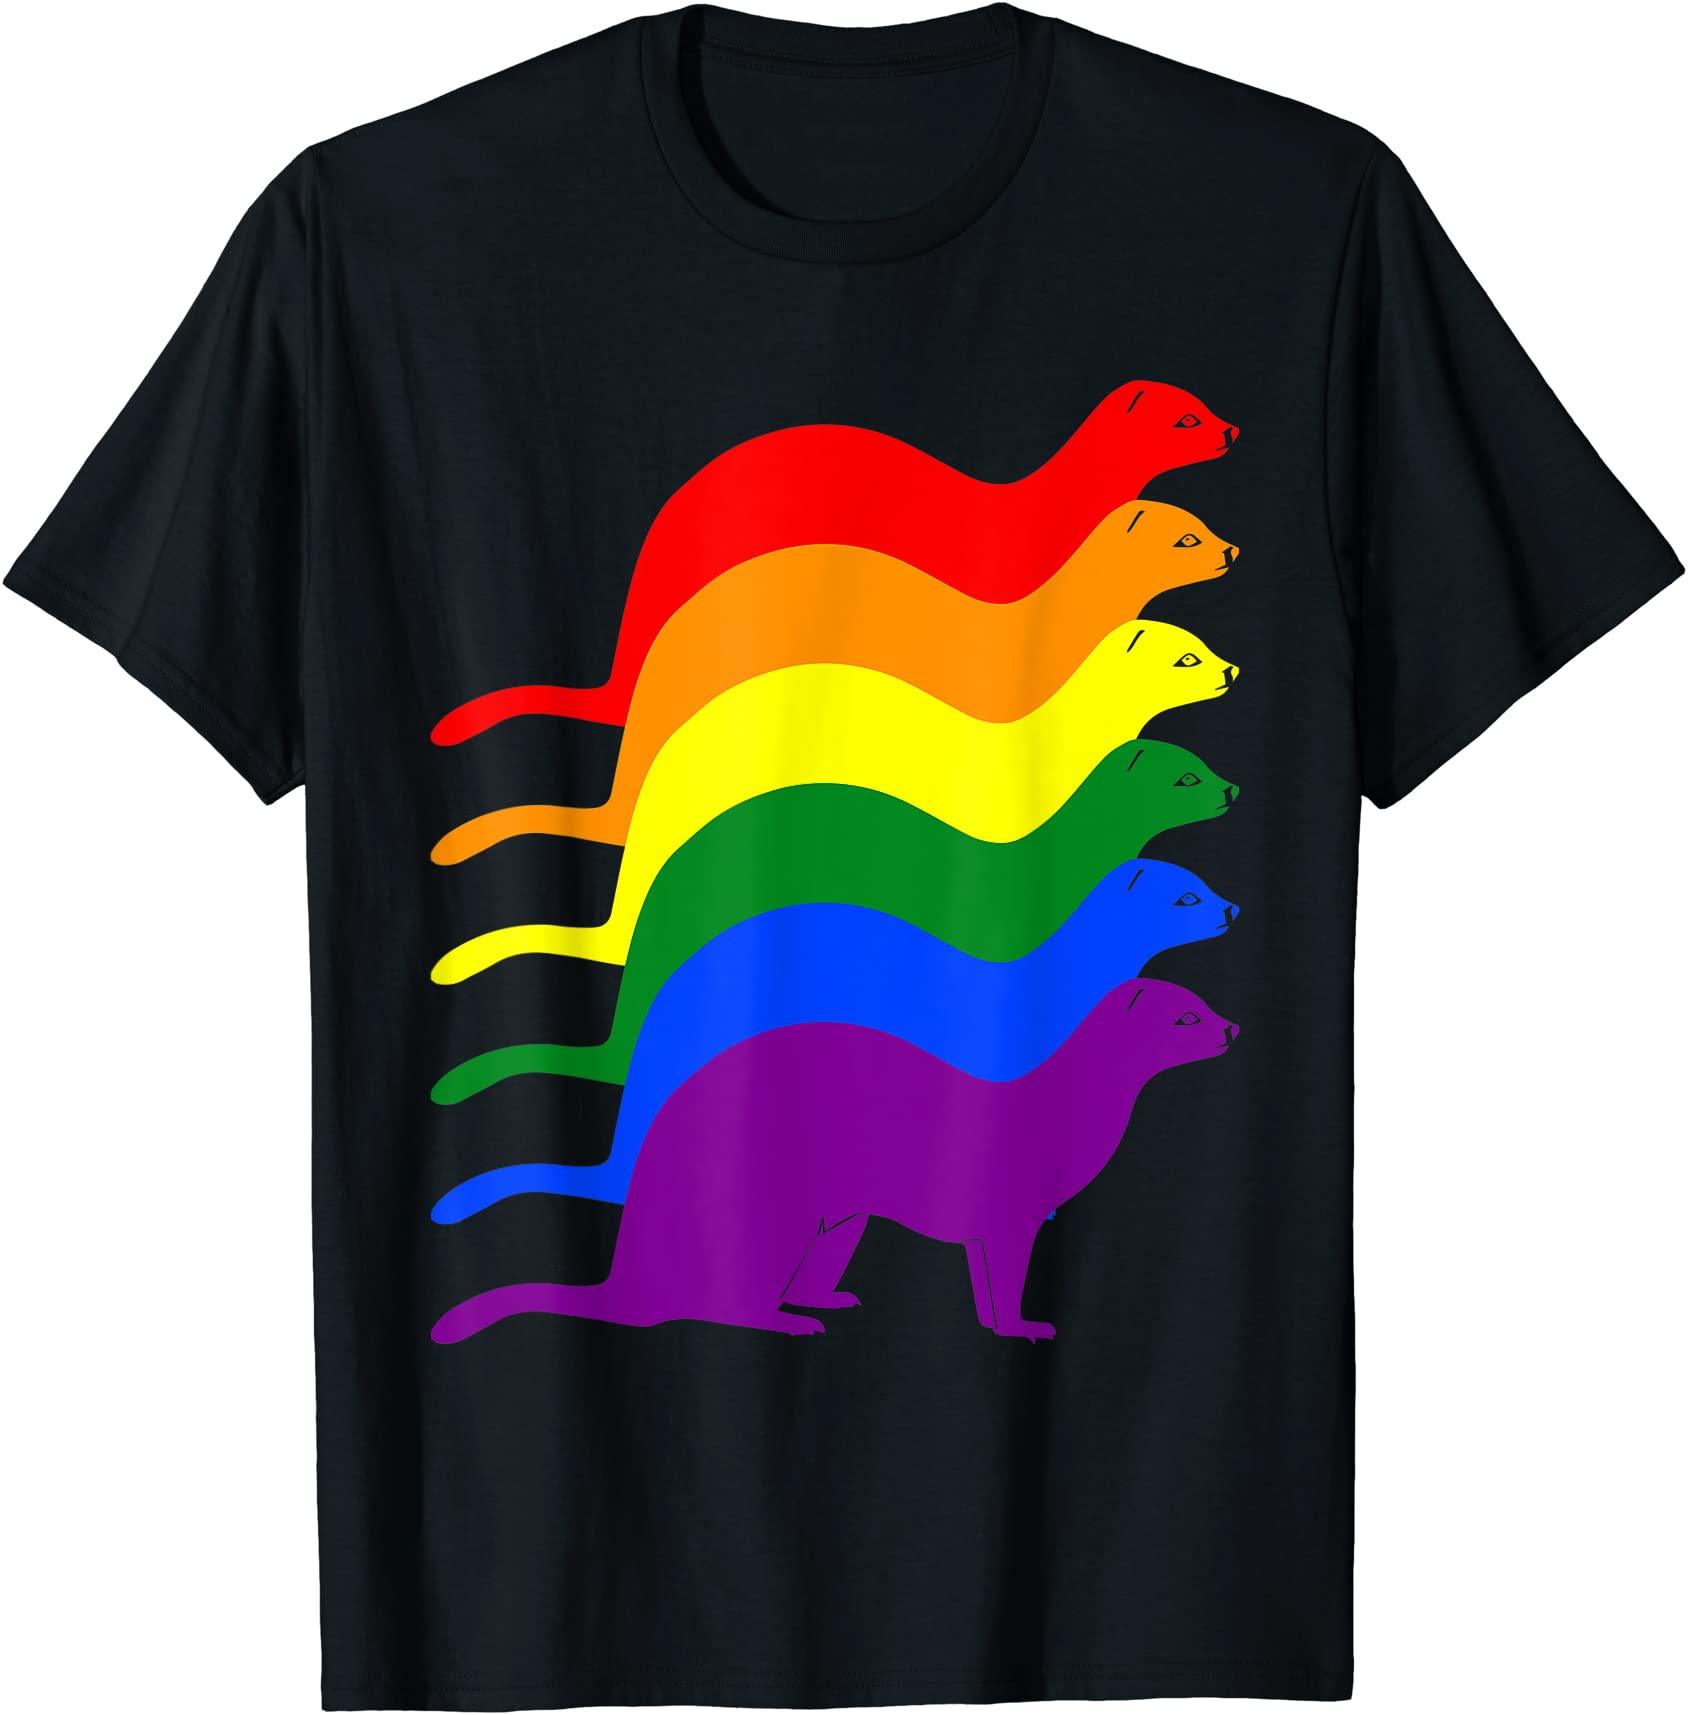 gay pride ferret lgbt rainbow flag awareness t shirt men - Buy t-shirt ...